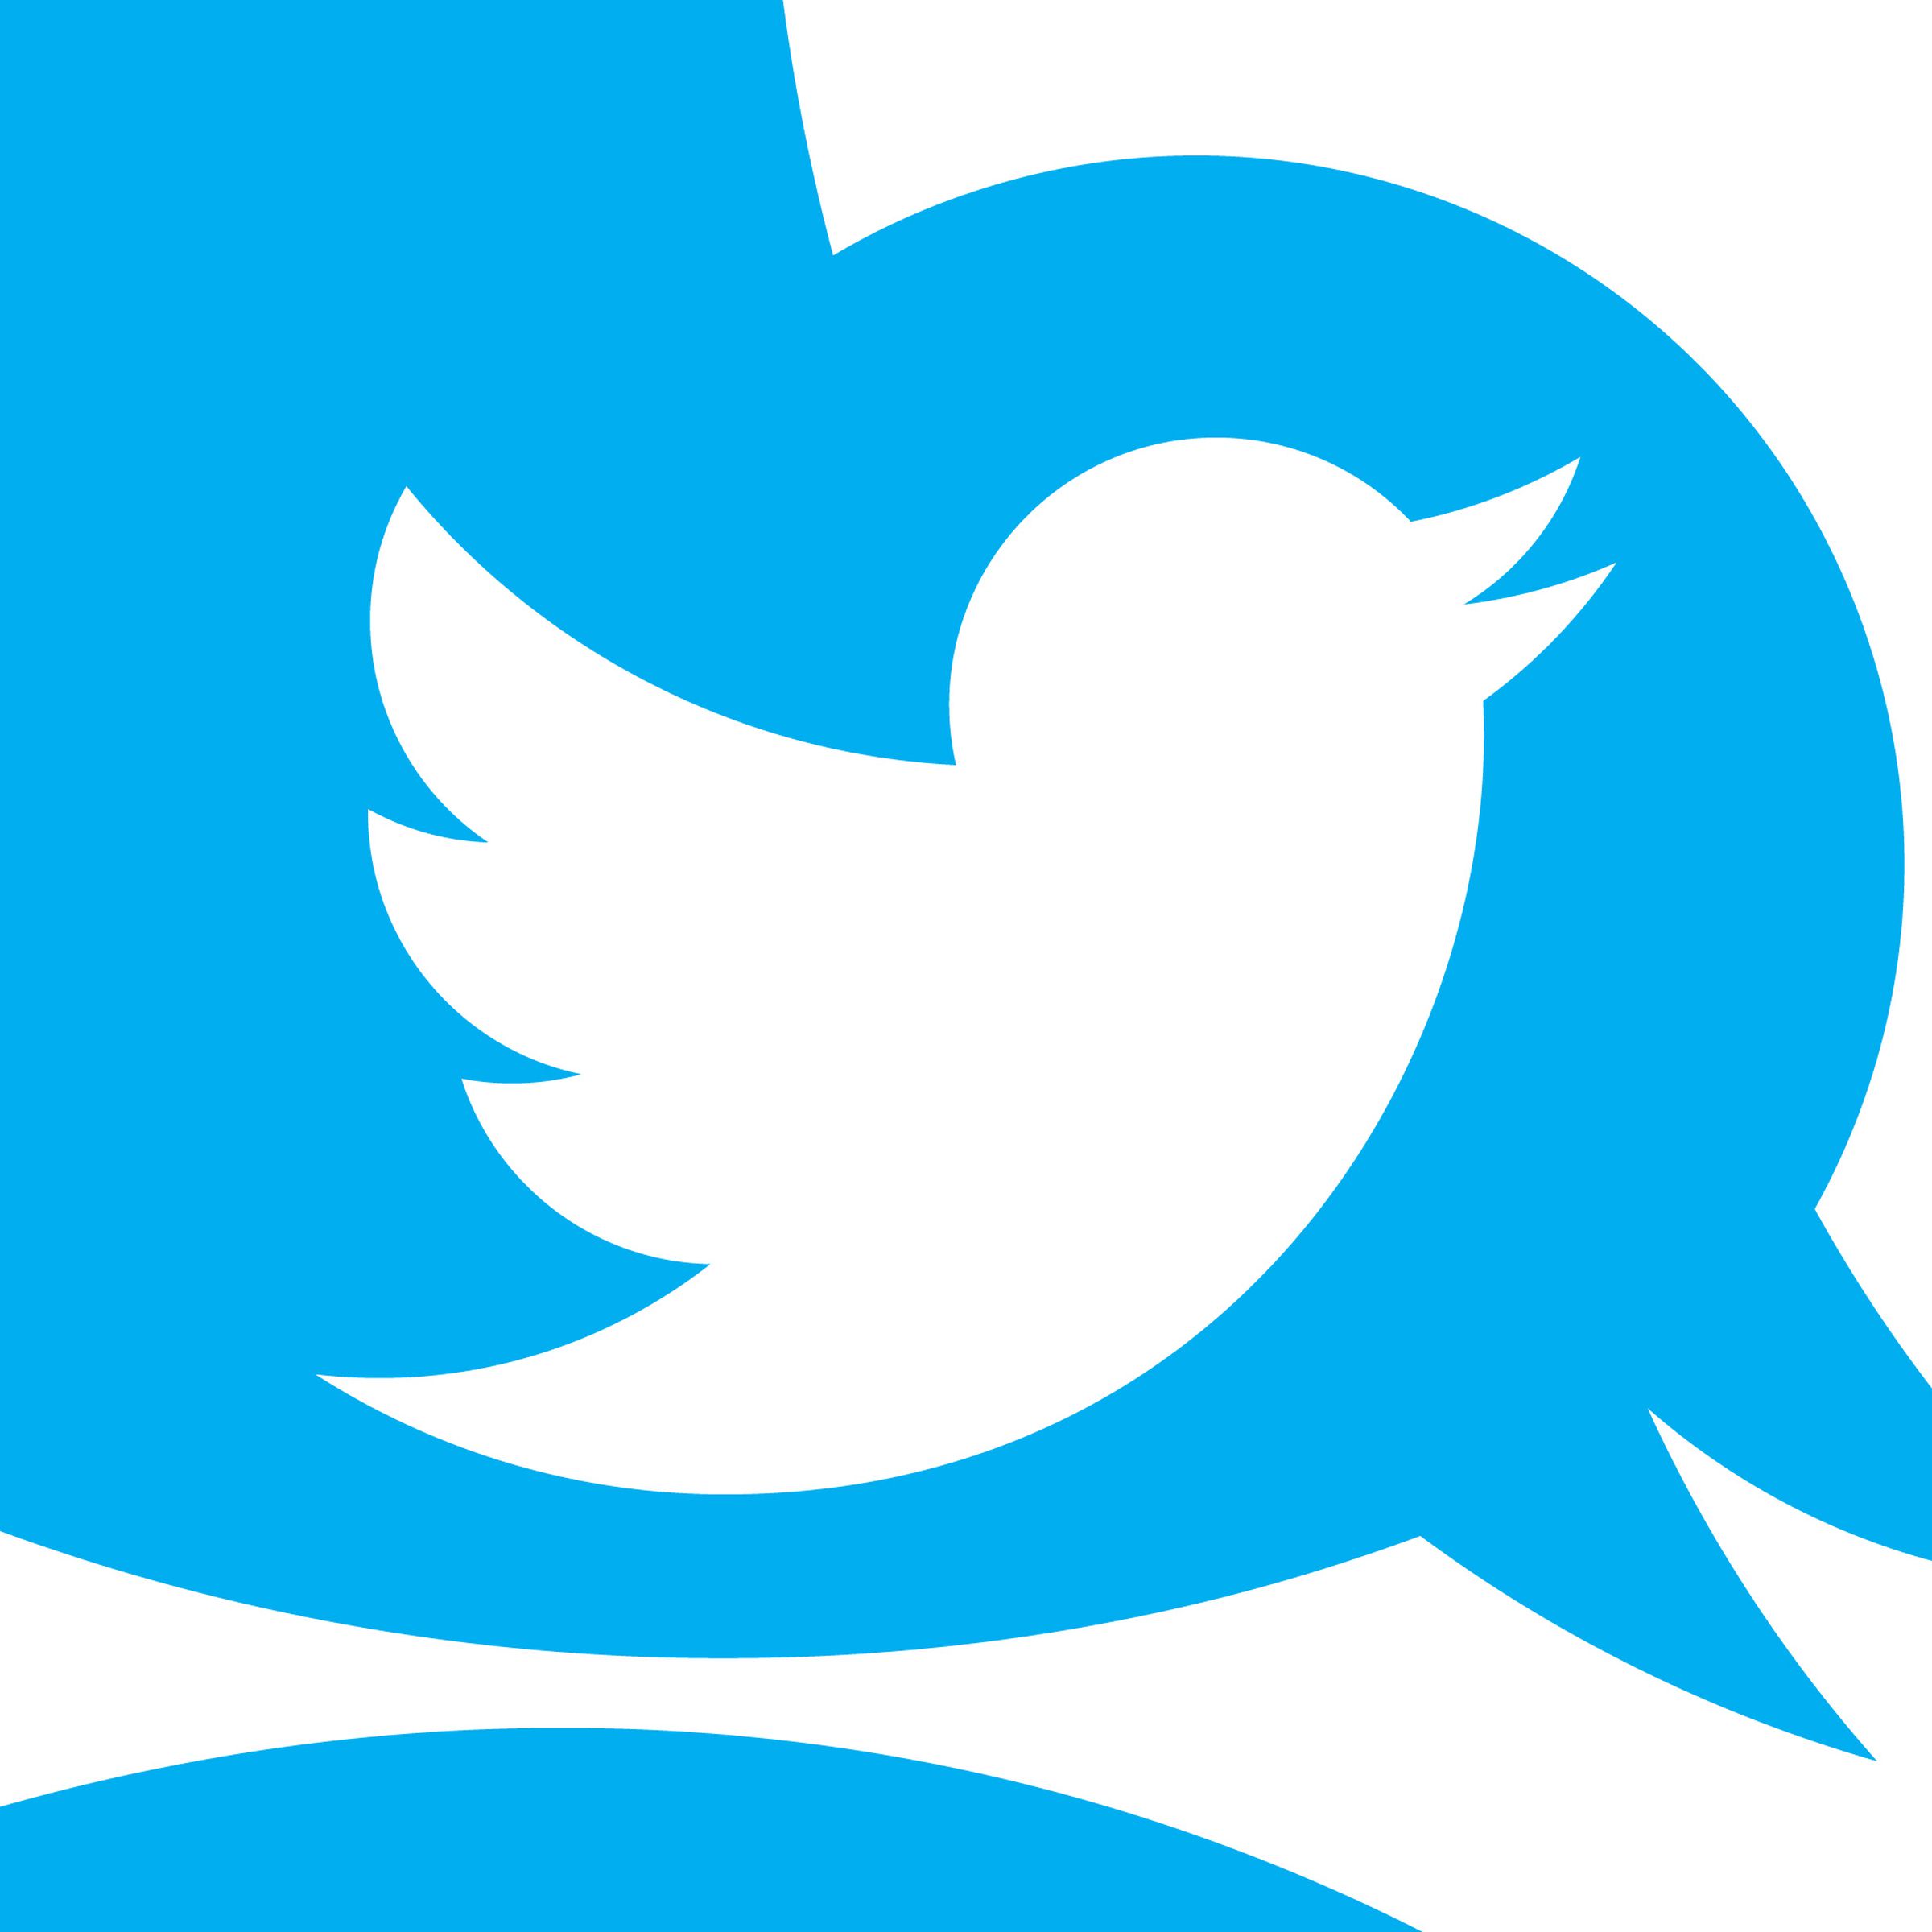 An illustration of the Twitter logo